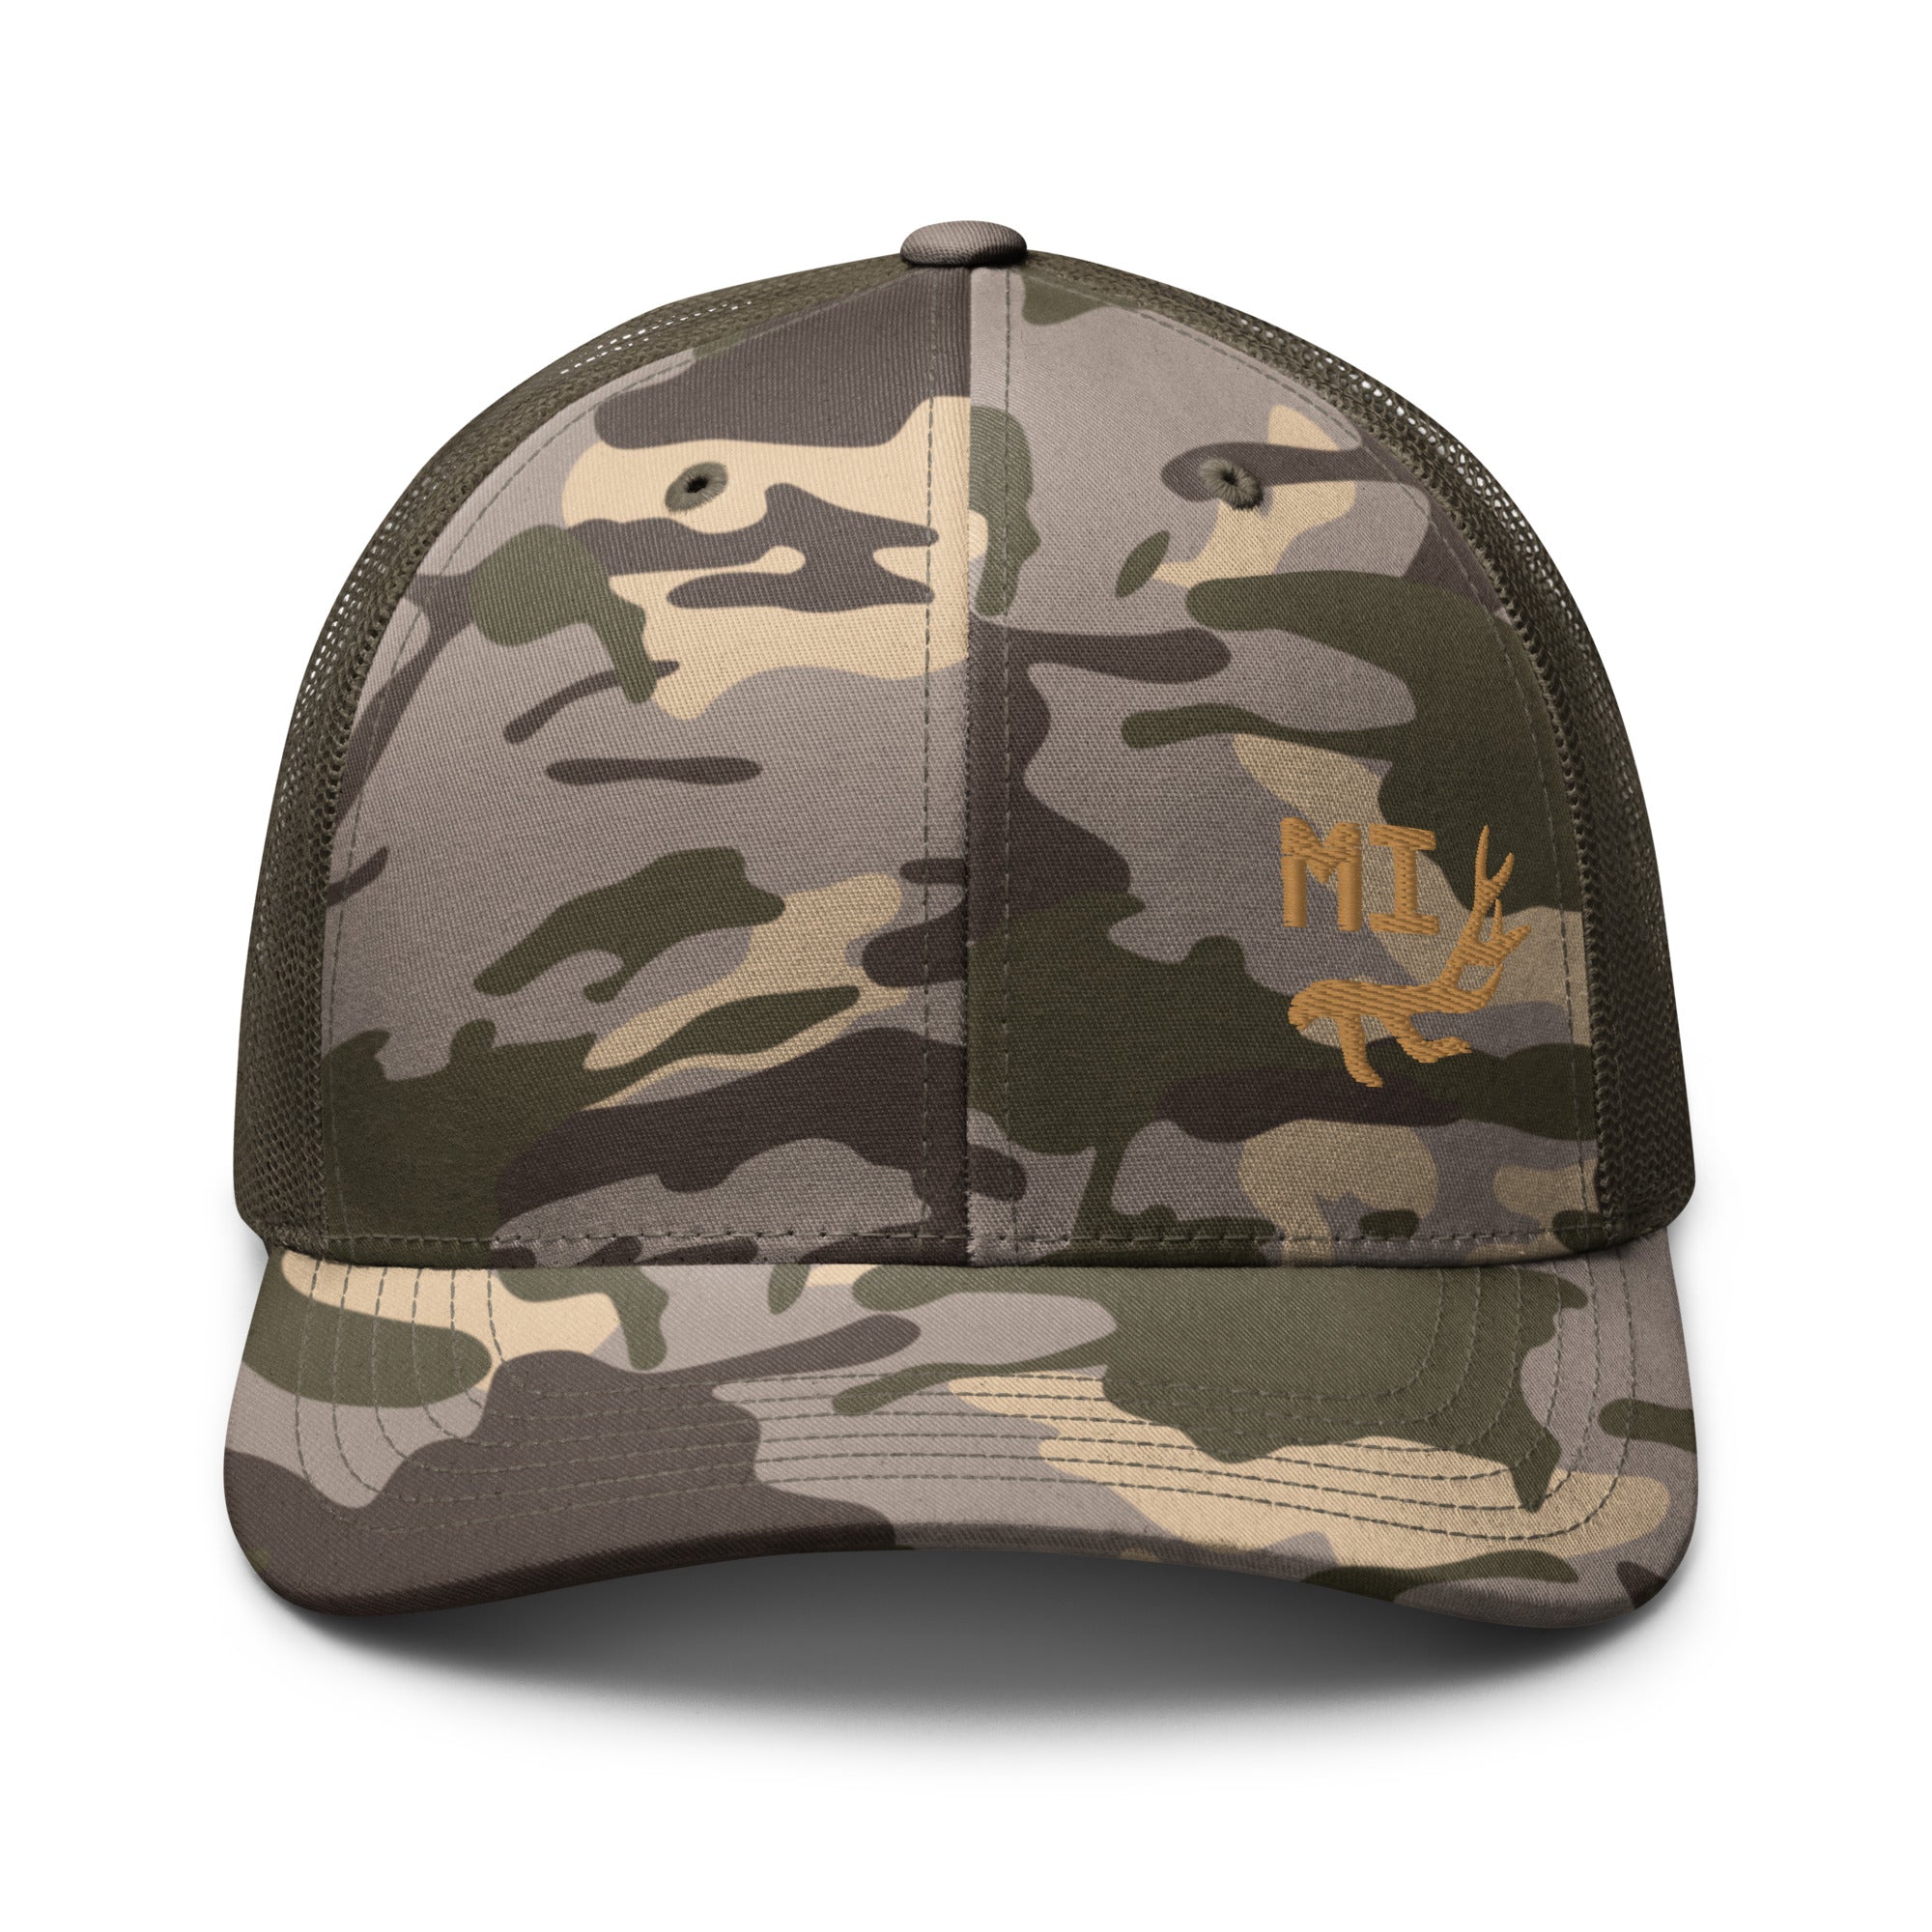 camouflage-trucker-hat-camo-olive-front-655e617b4503b.jpg